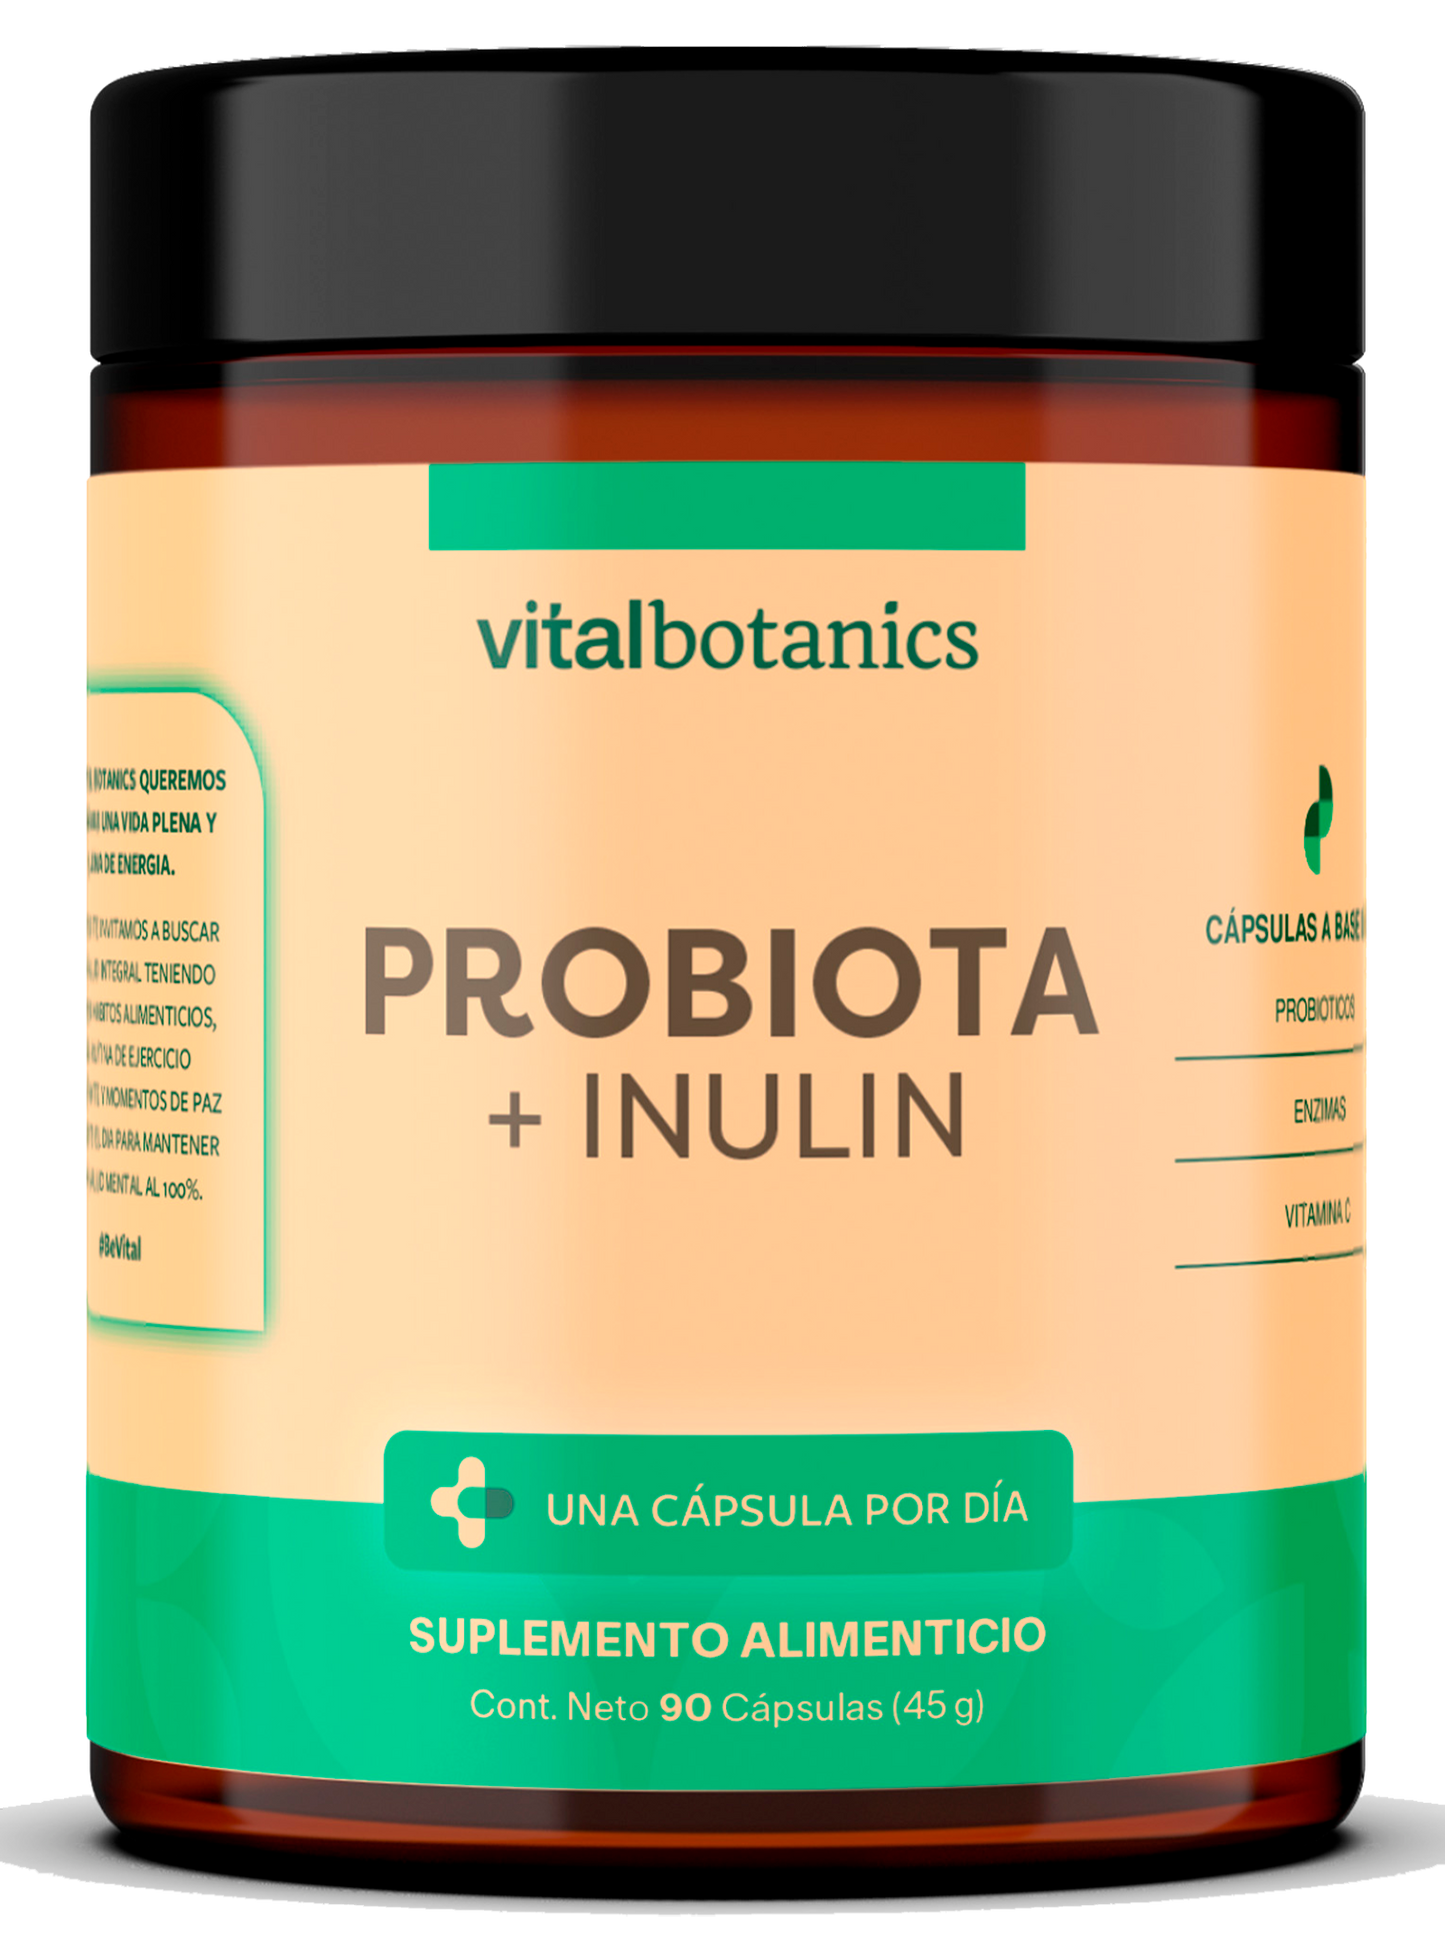 PROBIOTA + INULIN | Probióticos 60 Billion CFU